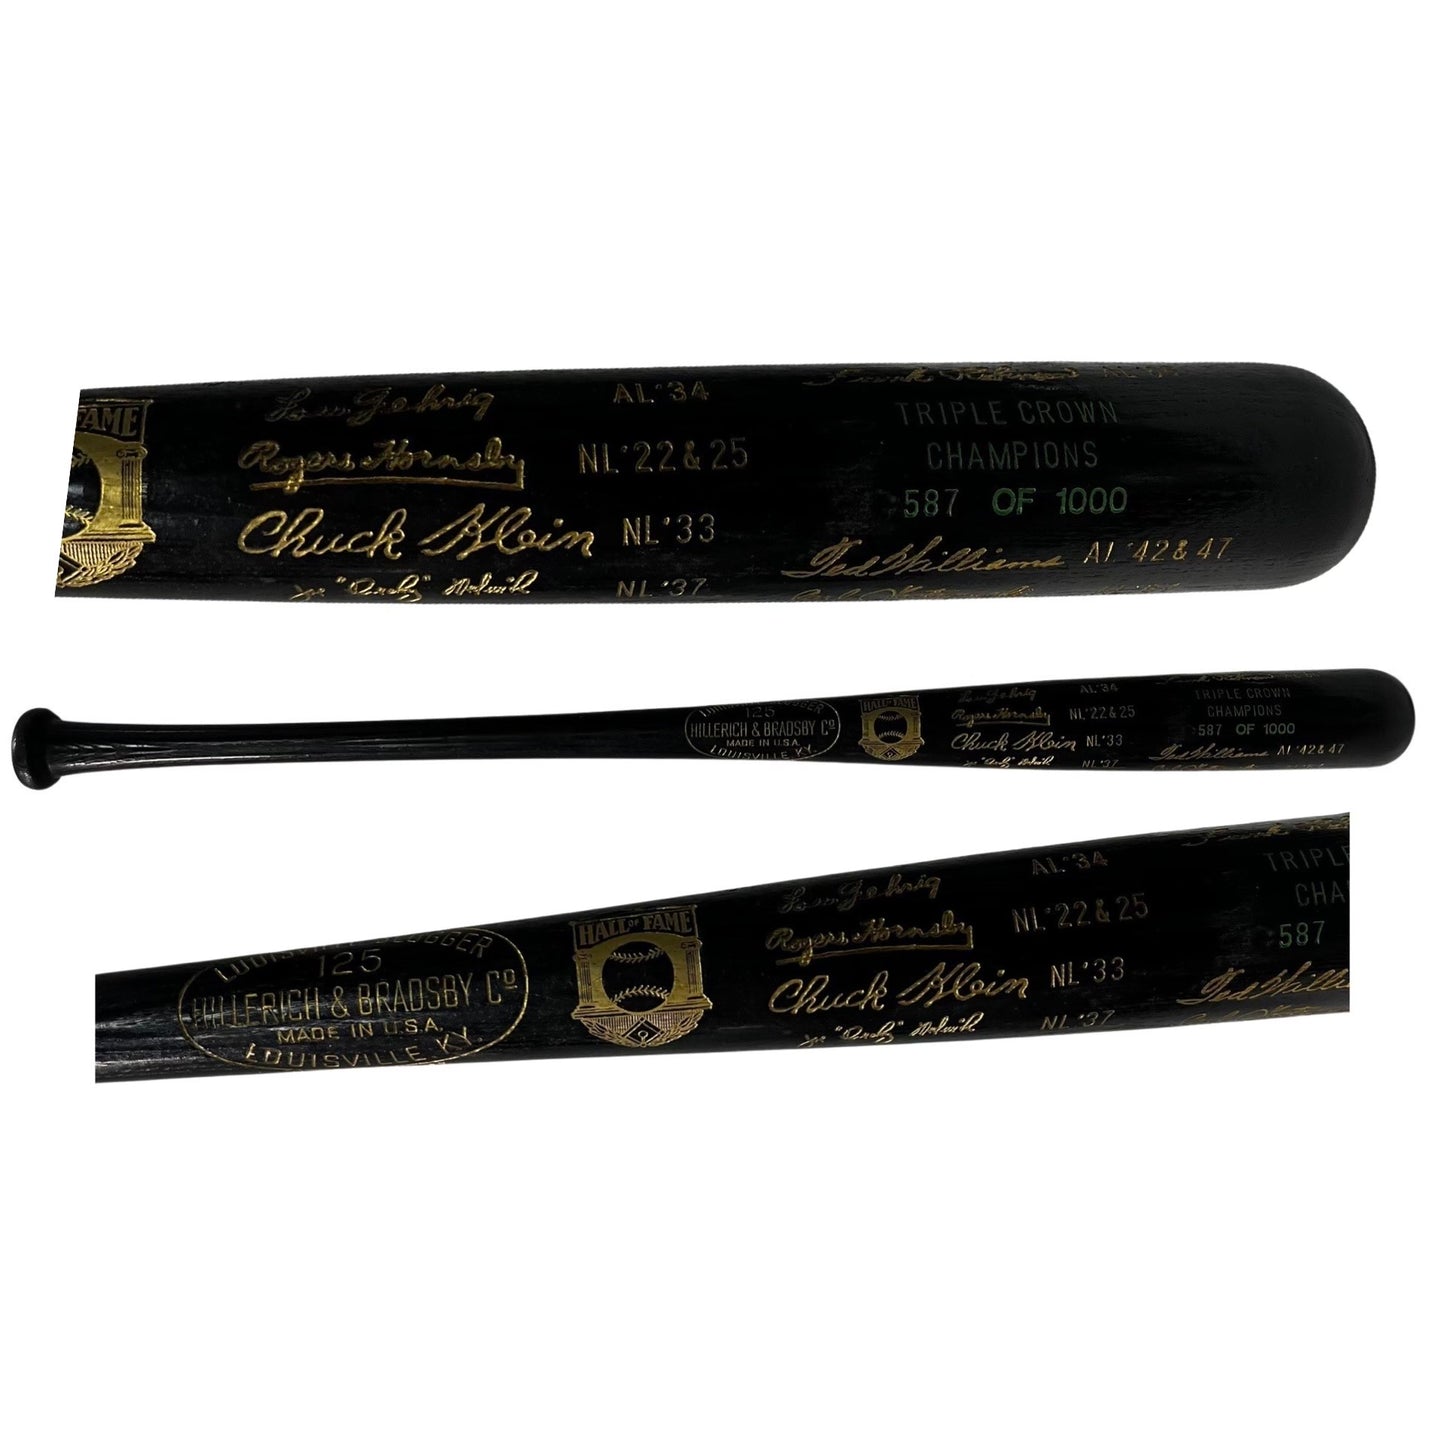 Triple Crown Limited Edition Louisville Slugger Bat